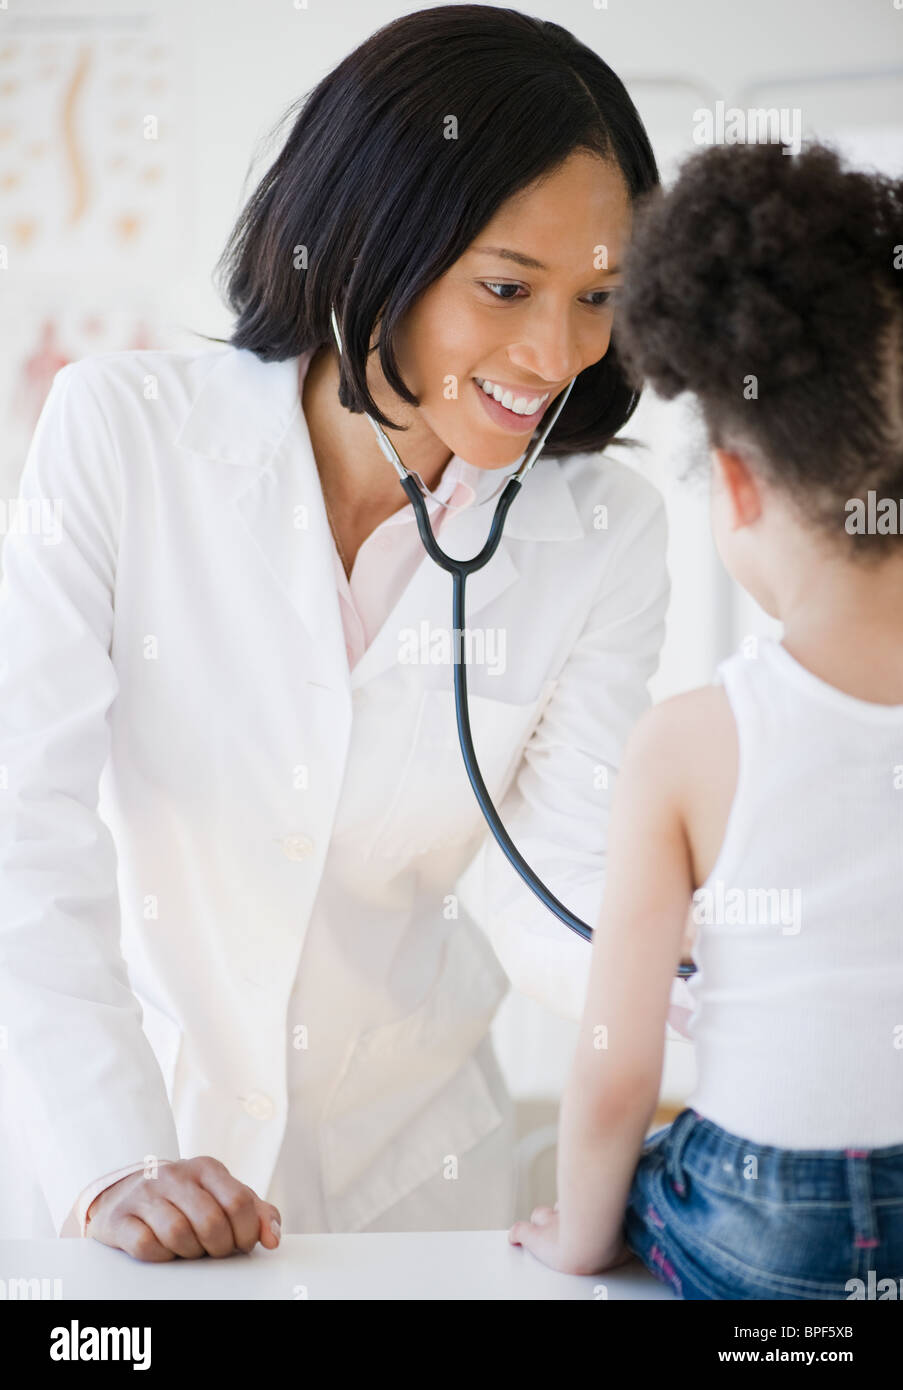 Pediatrician with stethoscope examining patient Stock Photo